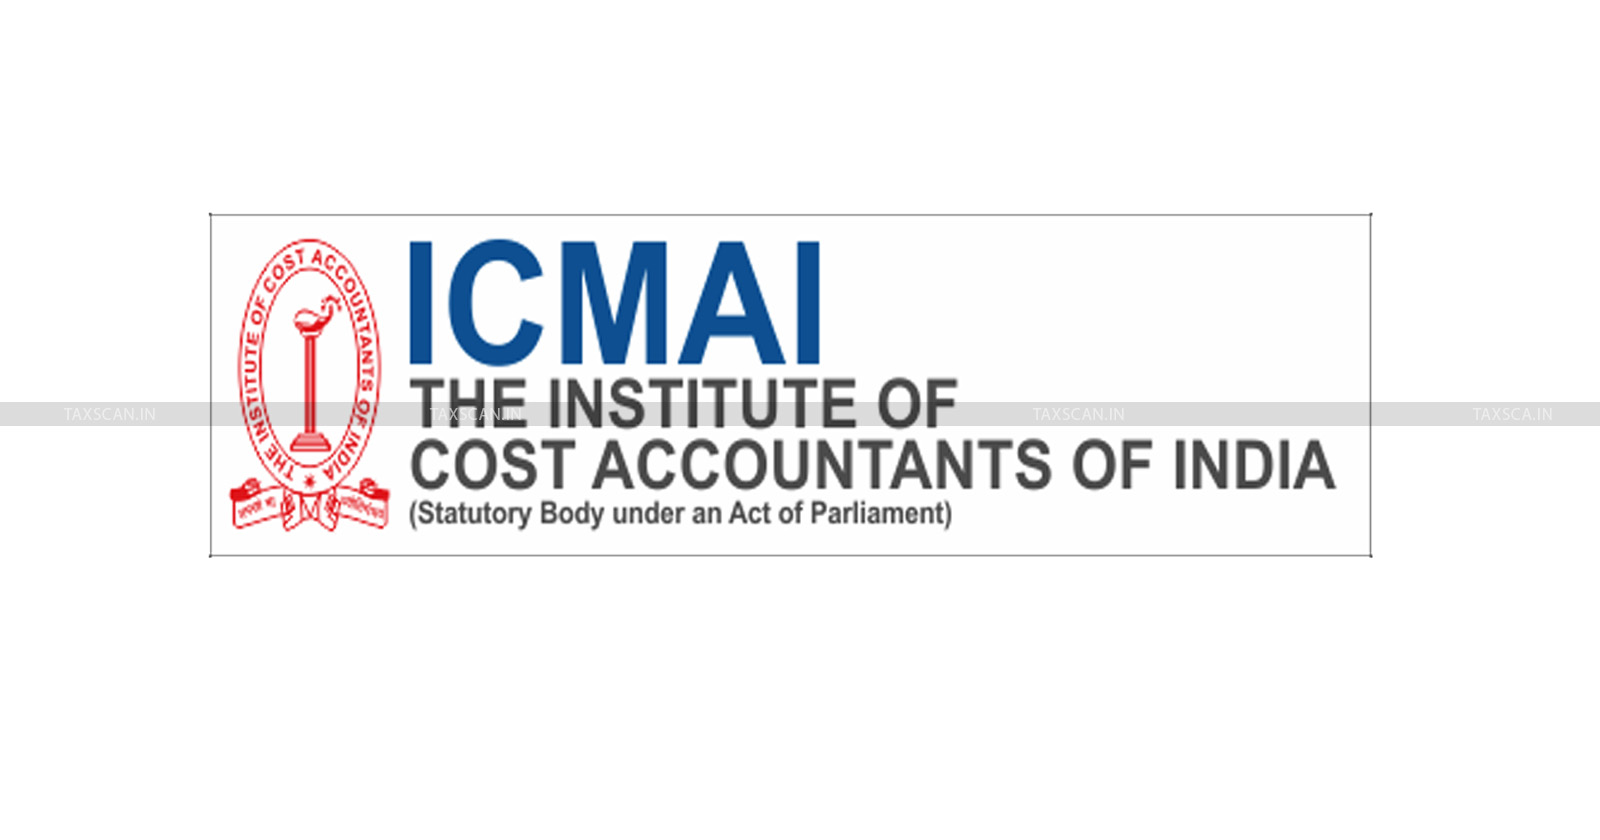 ICMAI - HQ - Kolkata to Delhi - Kolkata - Delhi - ICMAI Council Calls for Member Referendum on Shifting HQ - ICMAI Council - taxscan